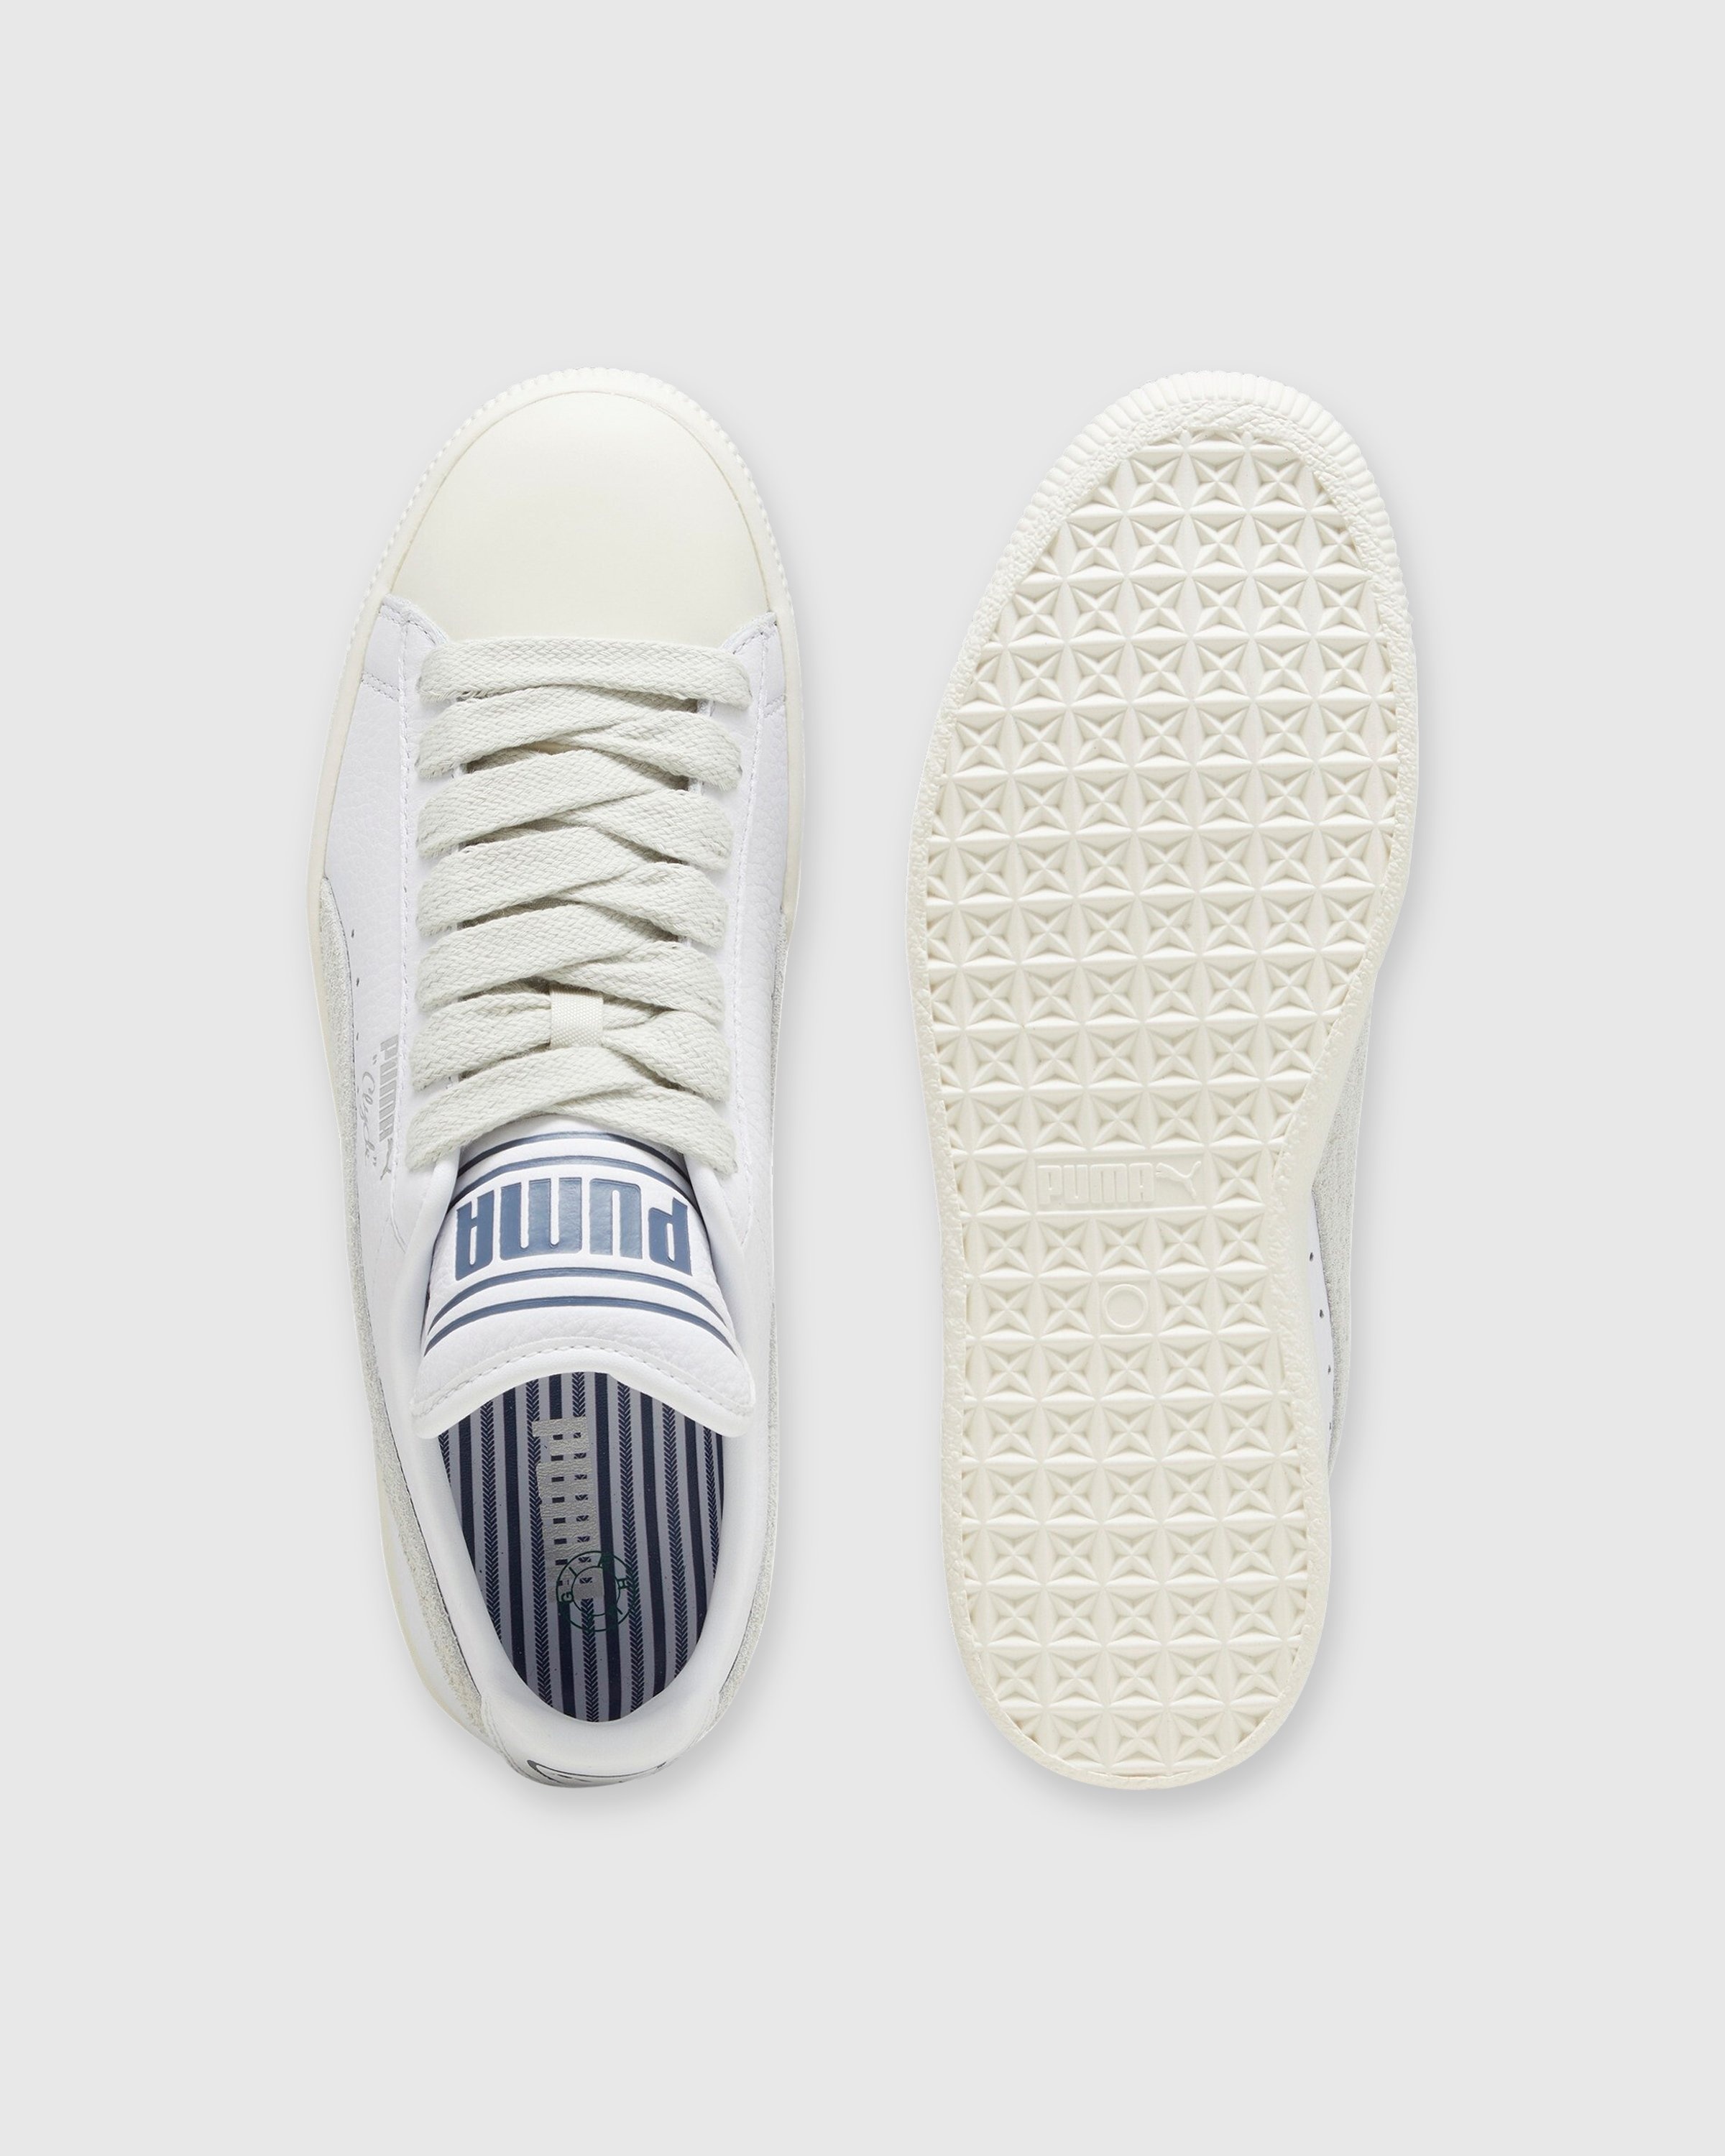 Puma – Clyde Rhuigi Pristine/Sedate Gray/White - Sneakers - White - Image 4